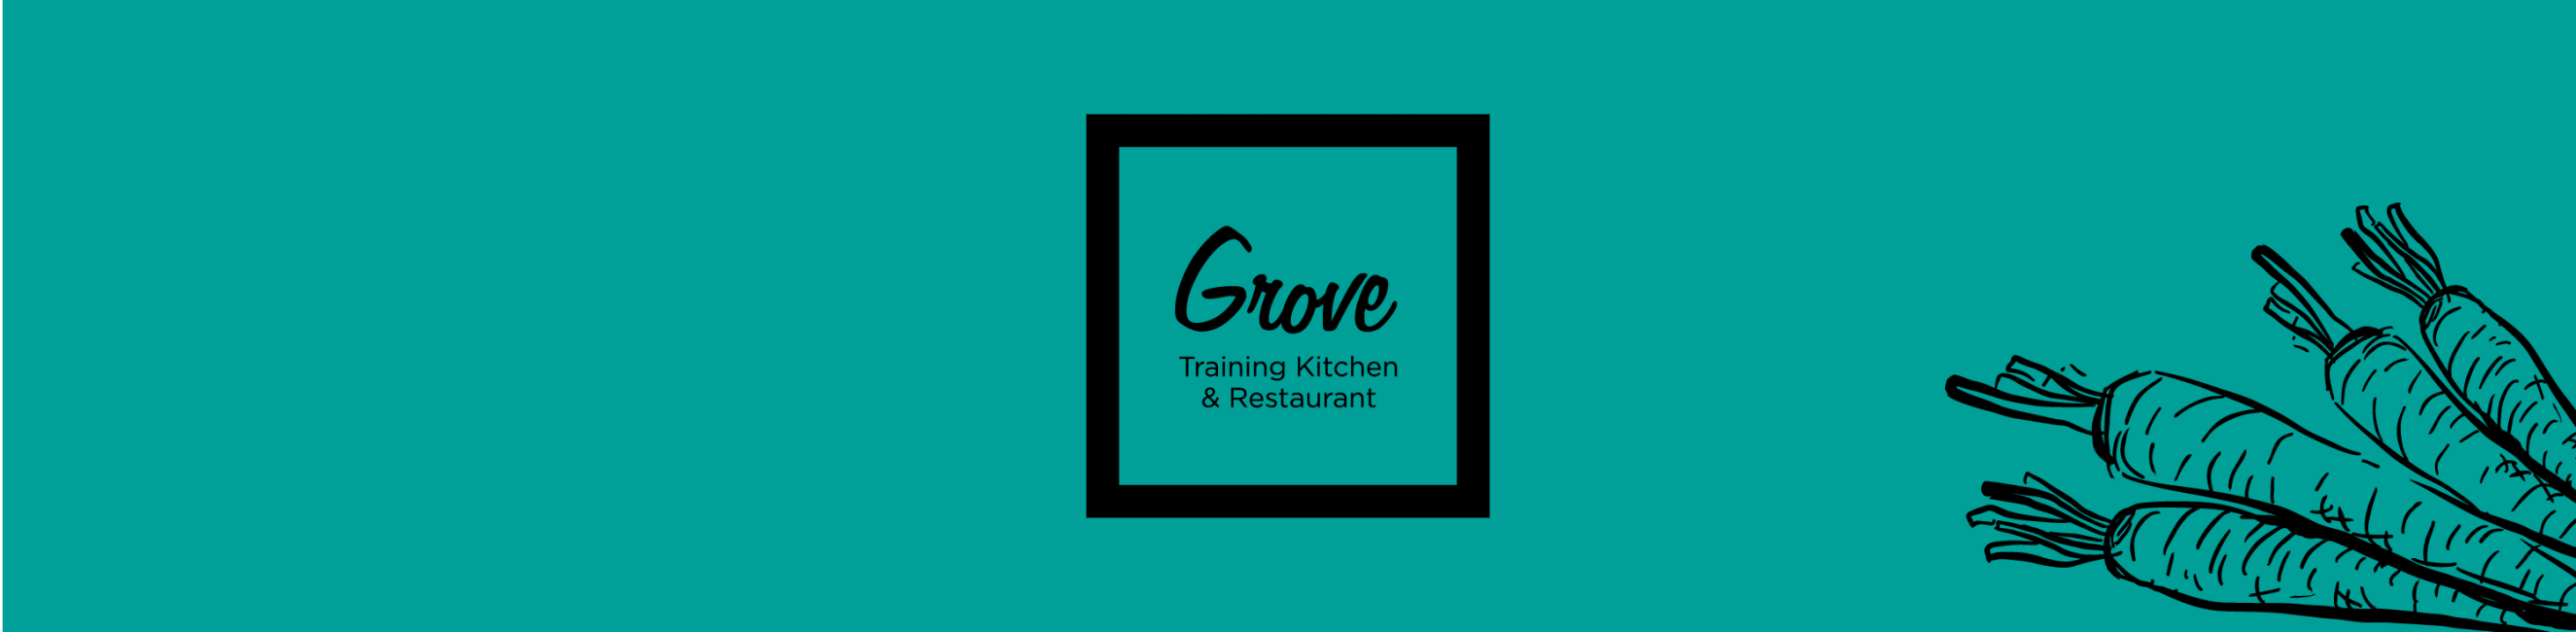 Grove Header logo